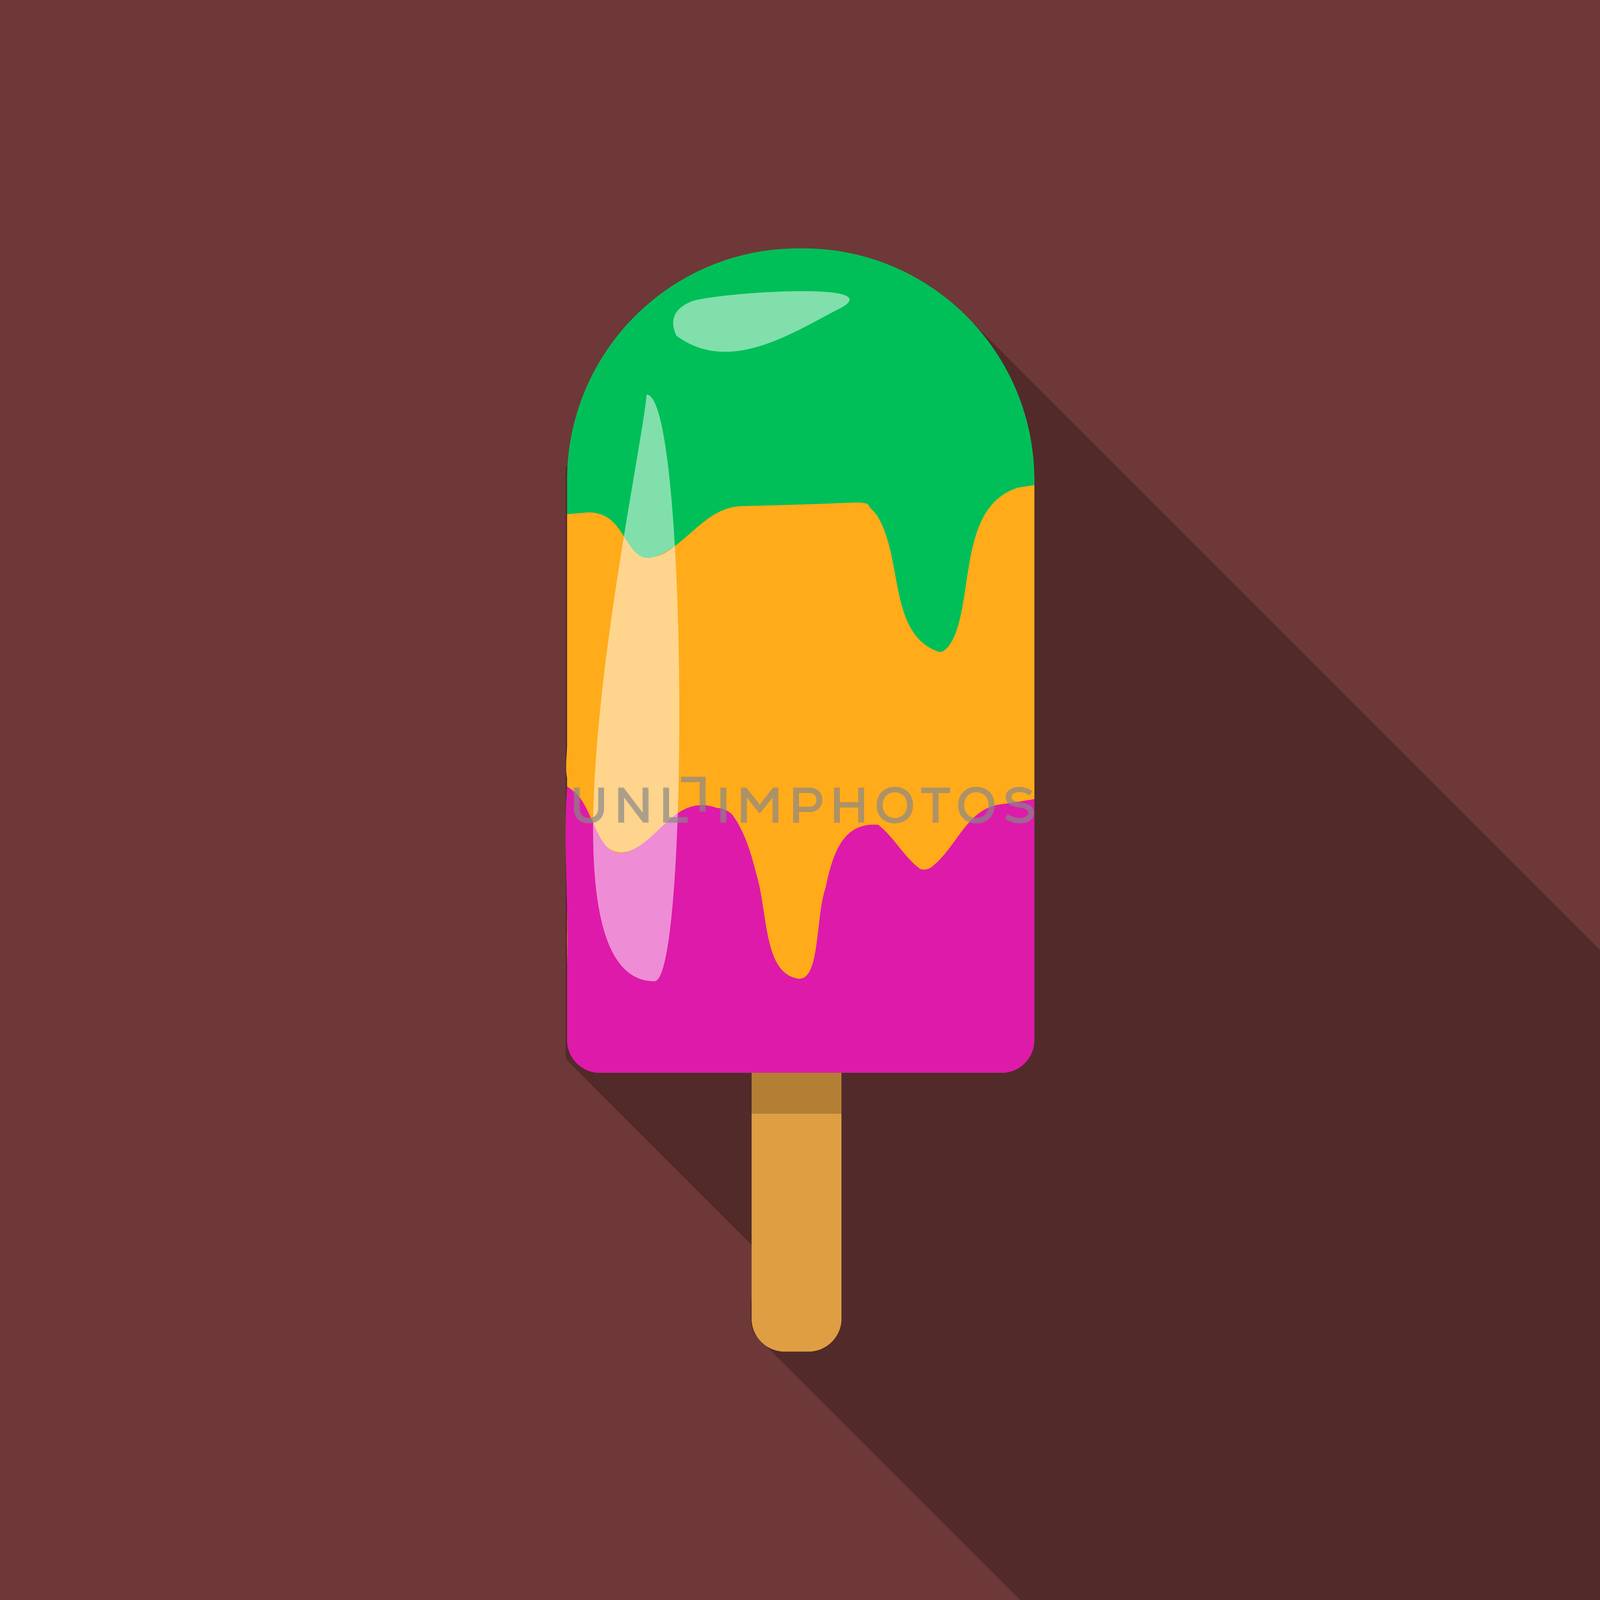 Flat design vector icecream icon with long shadow